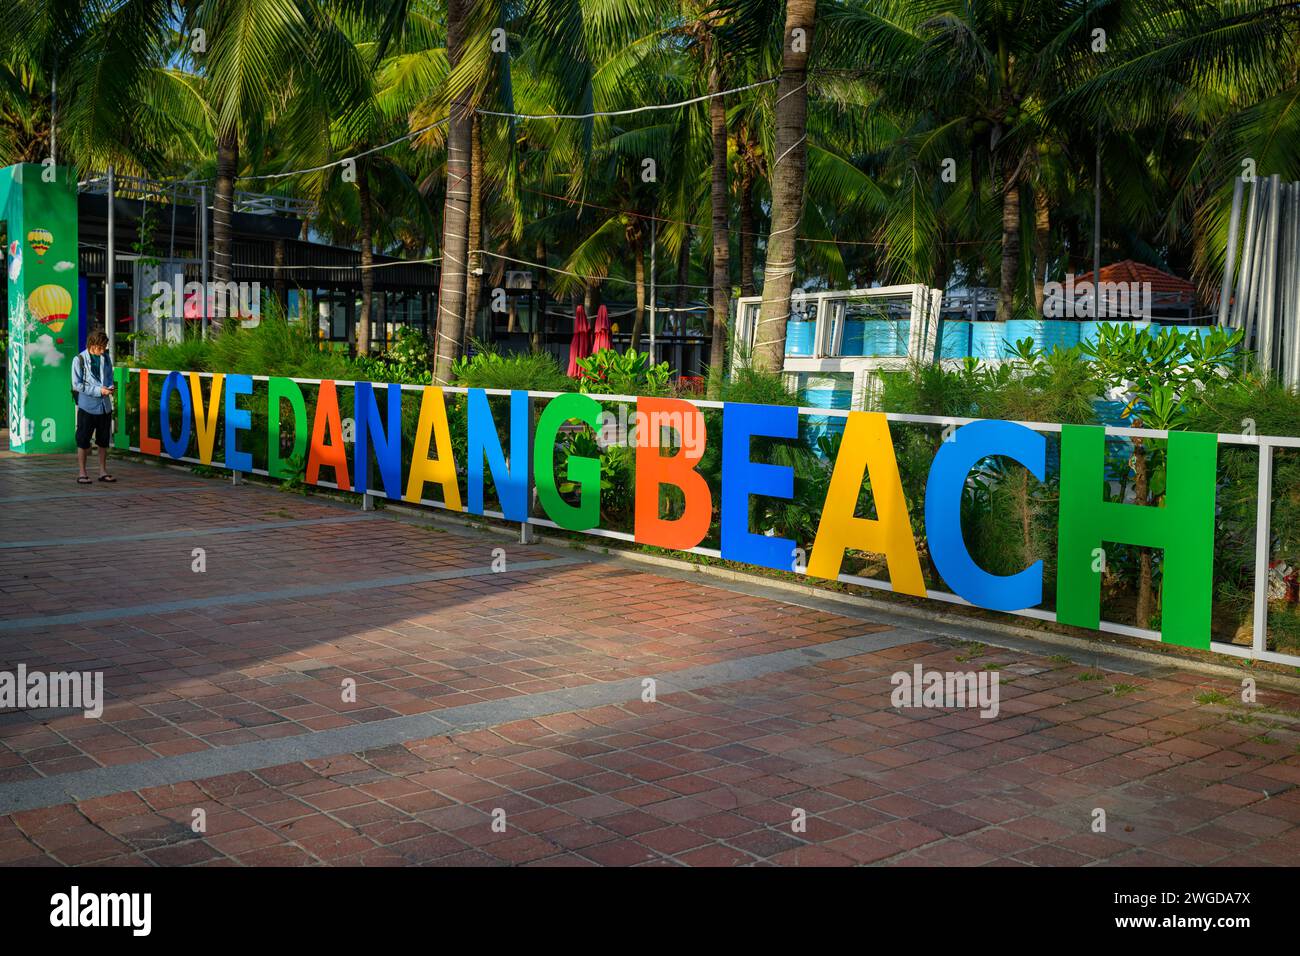 The I LOVE DANANG BEACH sign, Da Nang Beach, Vietnam Stock Photo